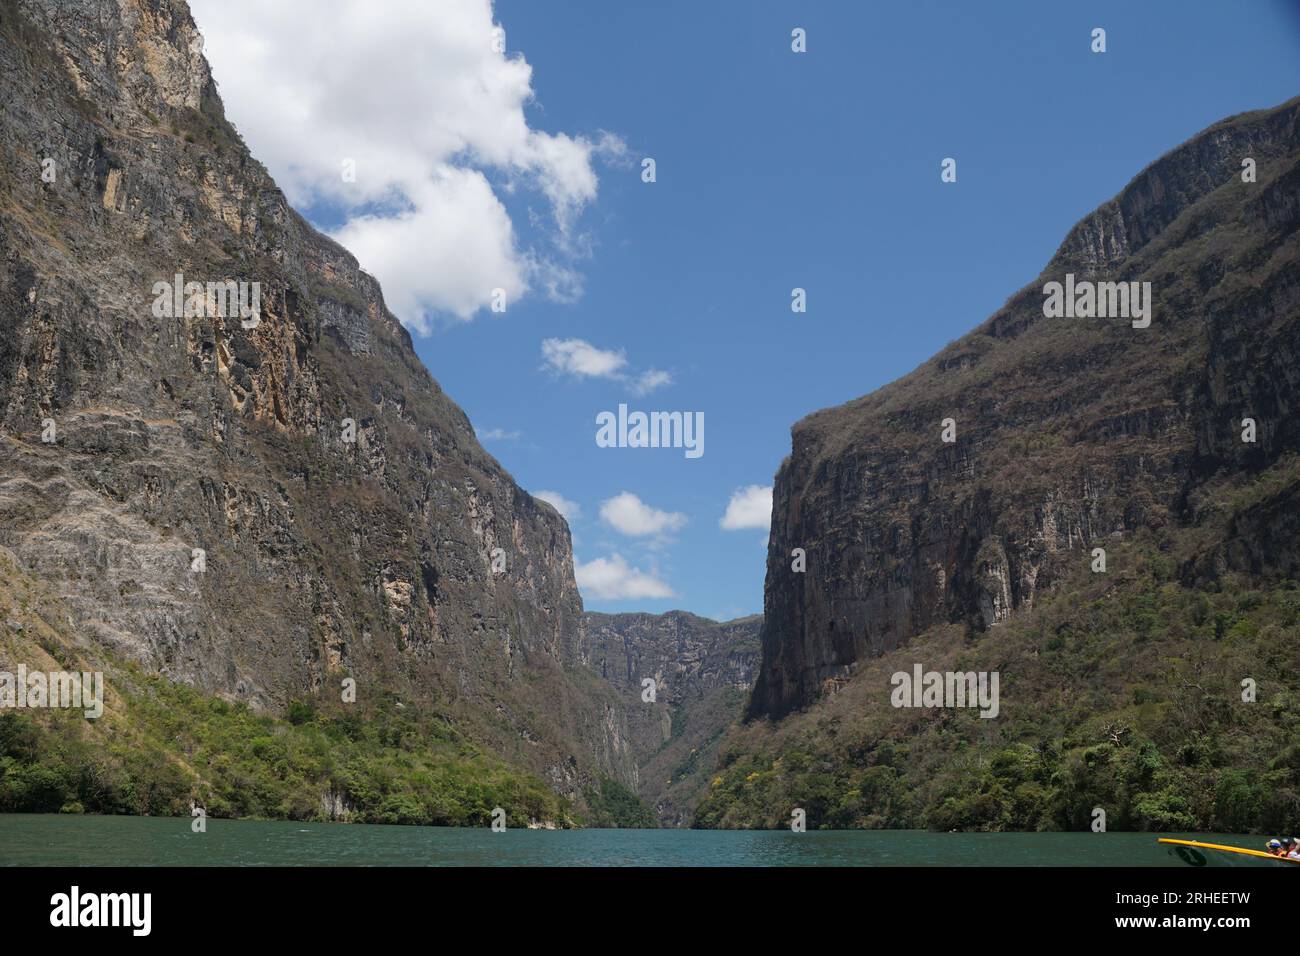 sumidero canyon, sky, clouds, boat, grijalva river, vegetation, trees at chiapas, mexico Stock Photo